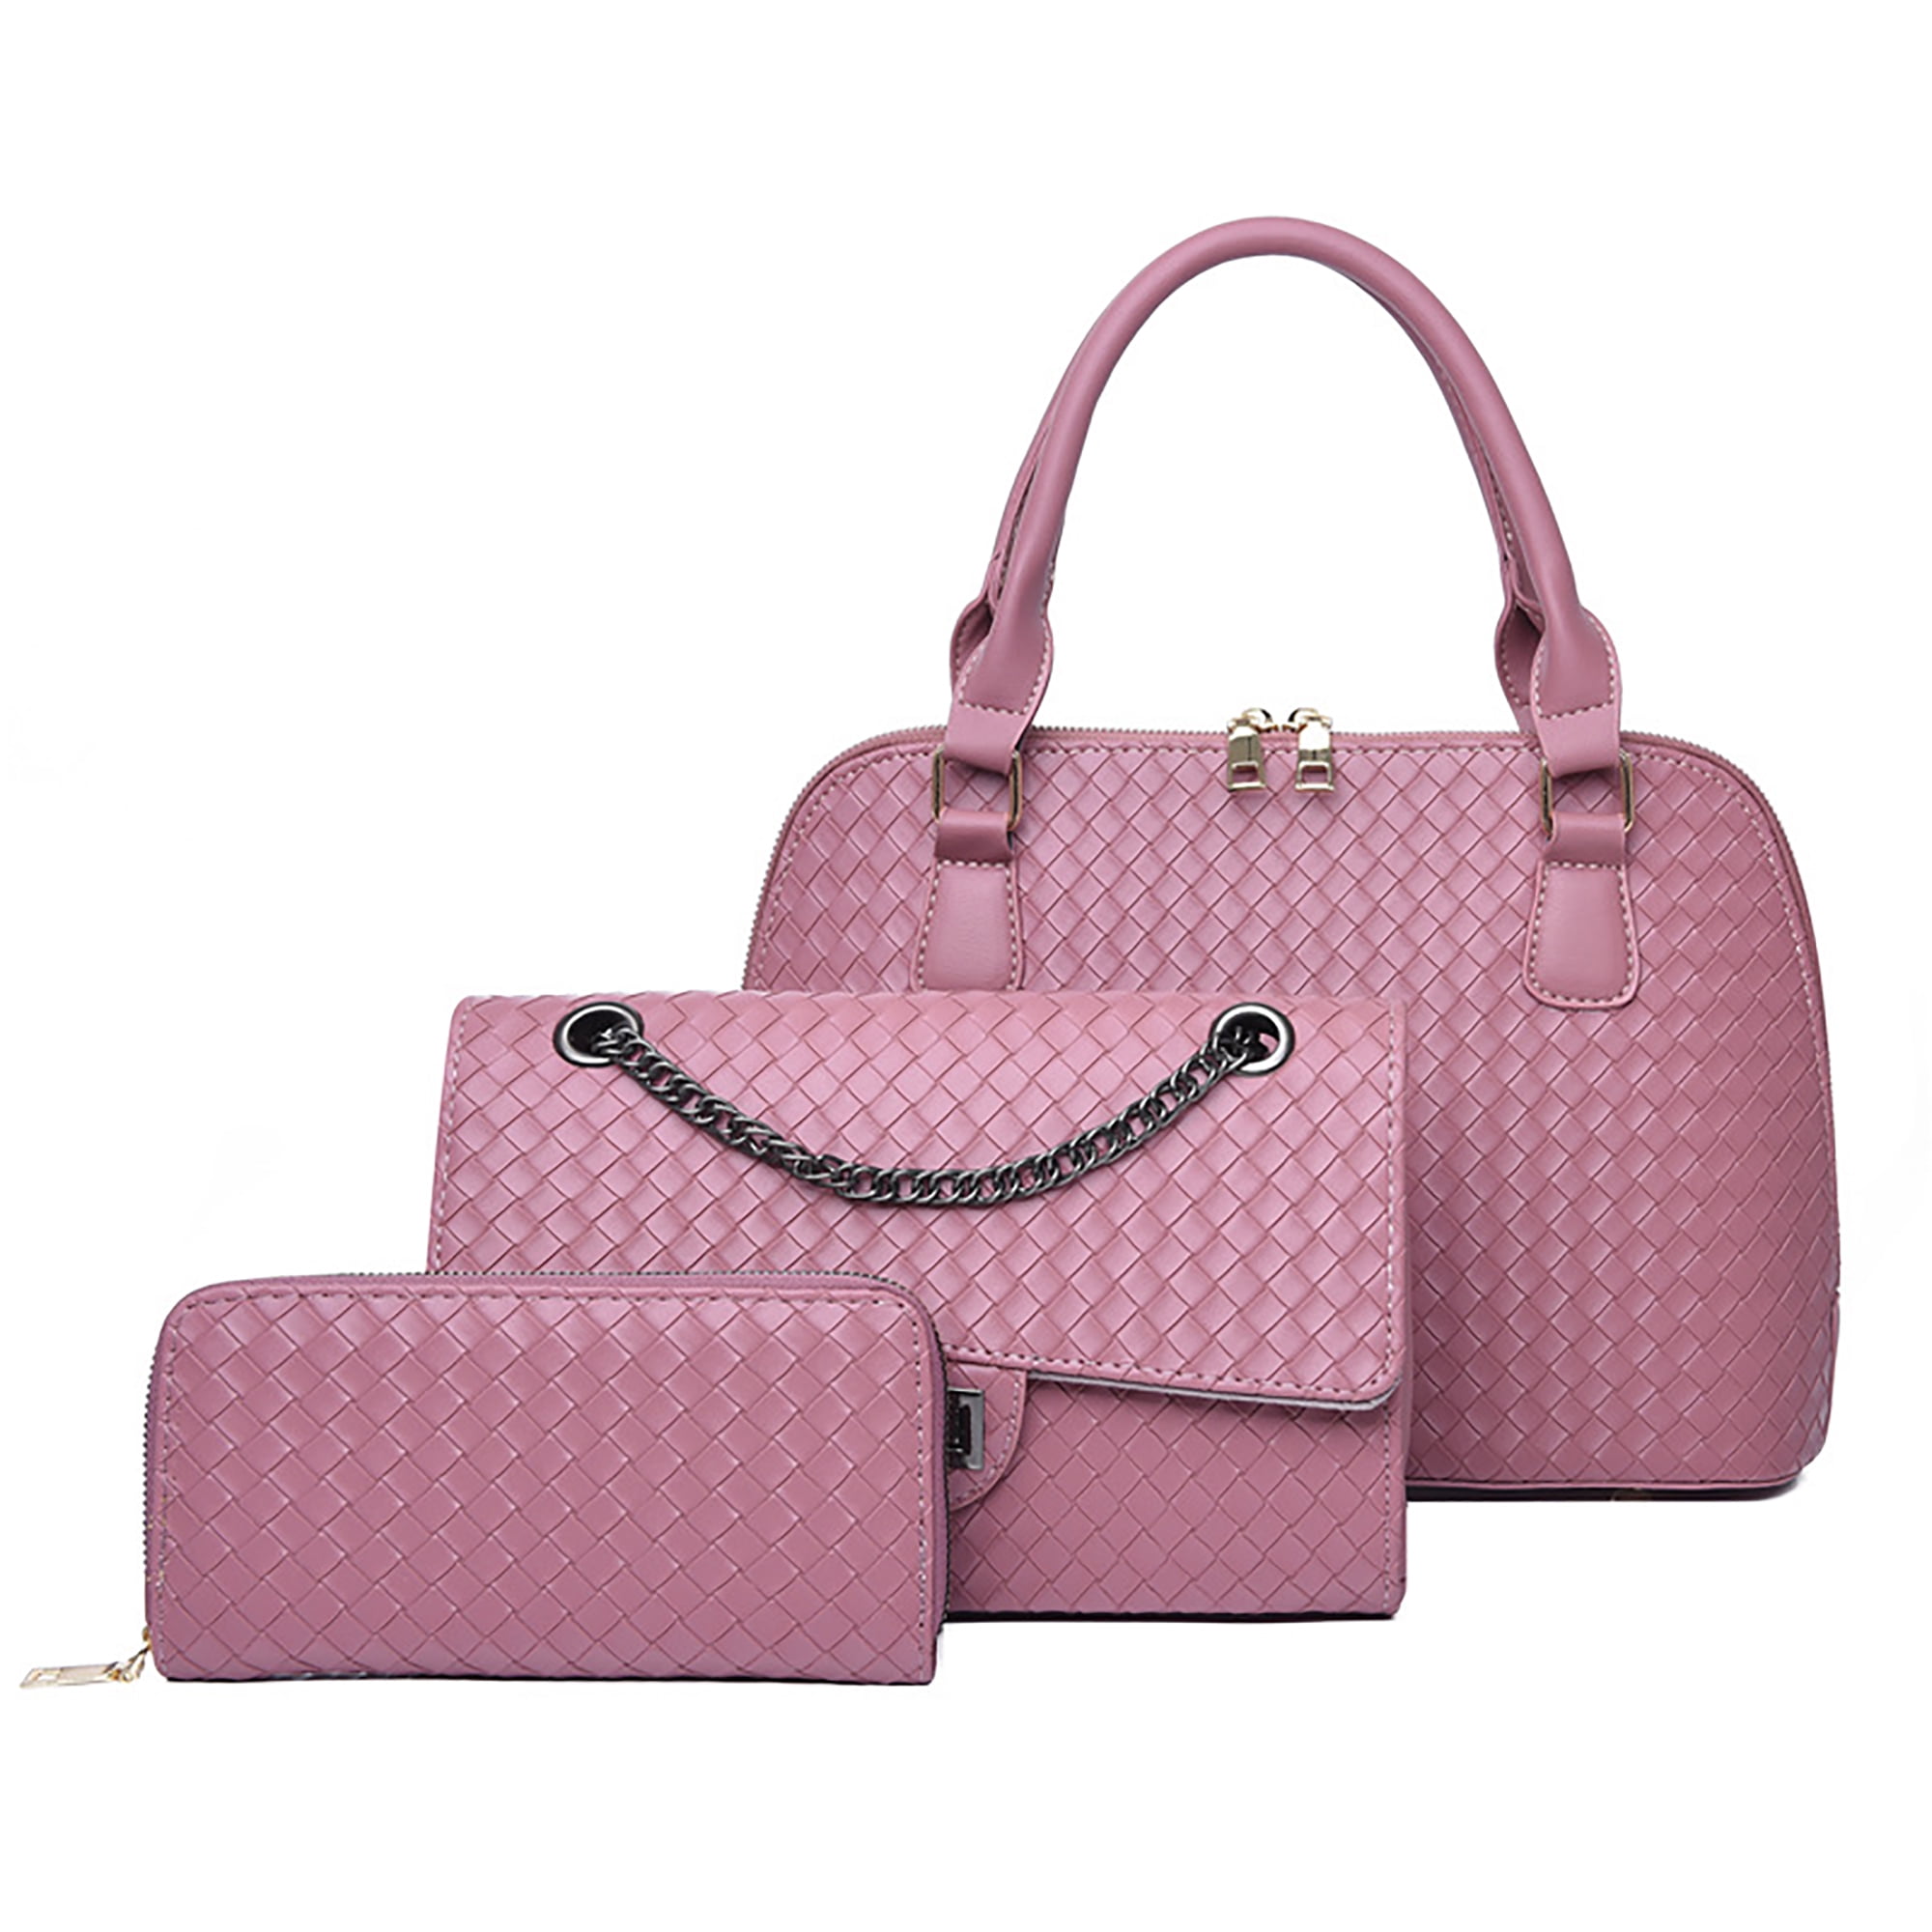 3 Handbags Every Woman Needs